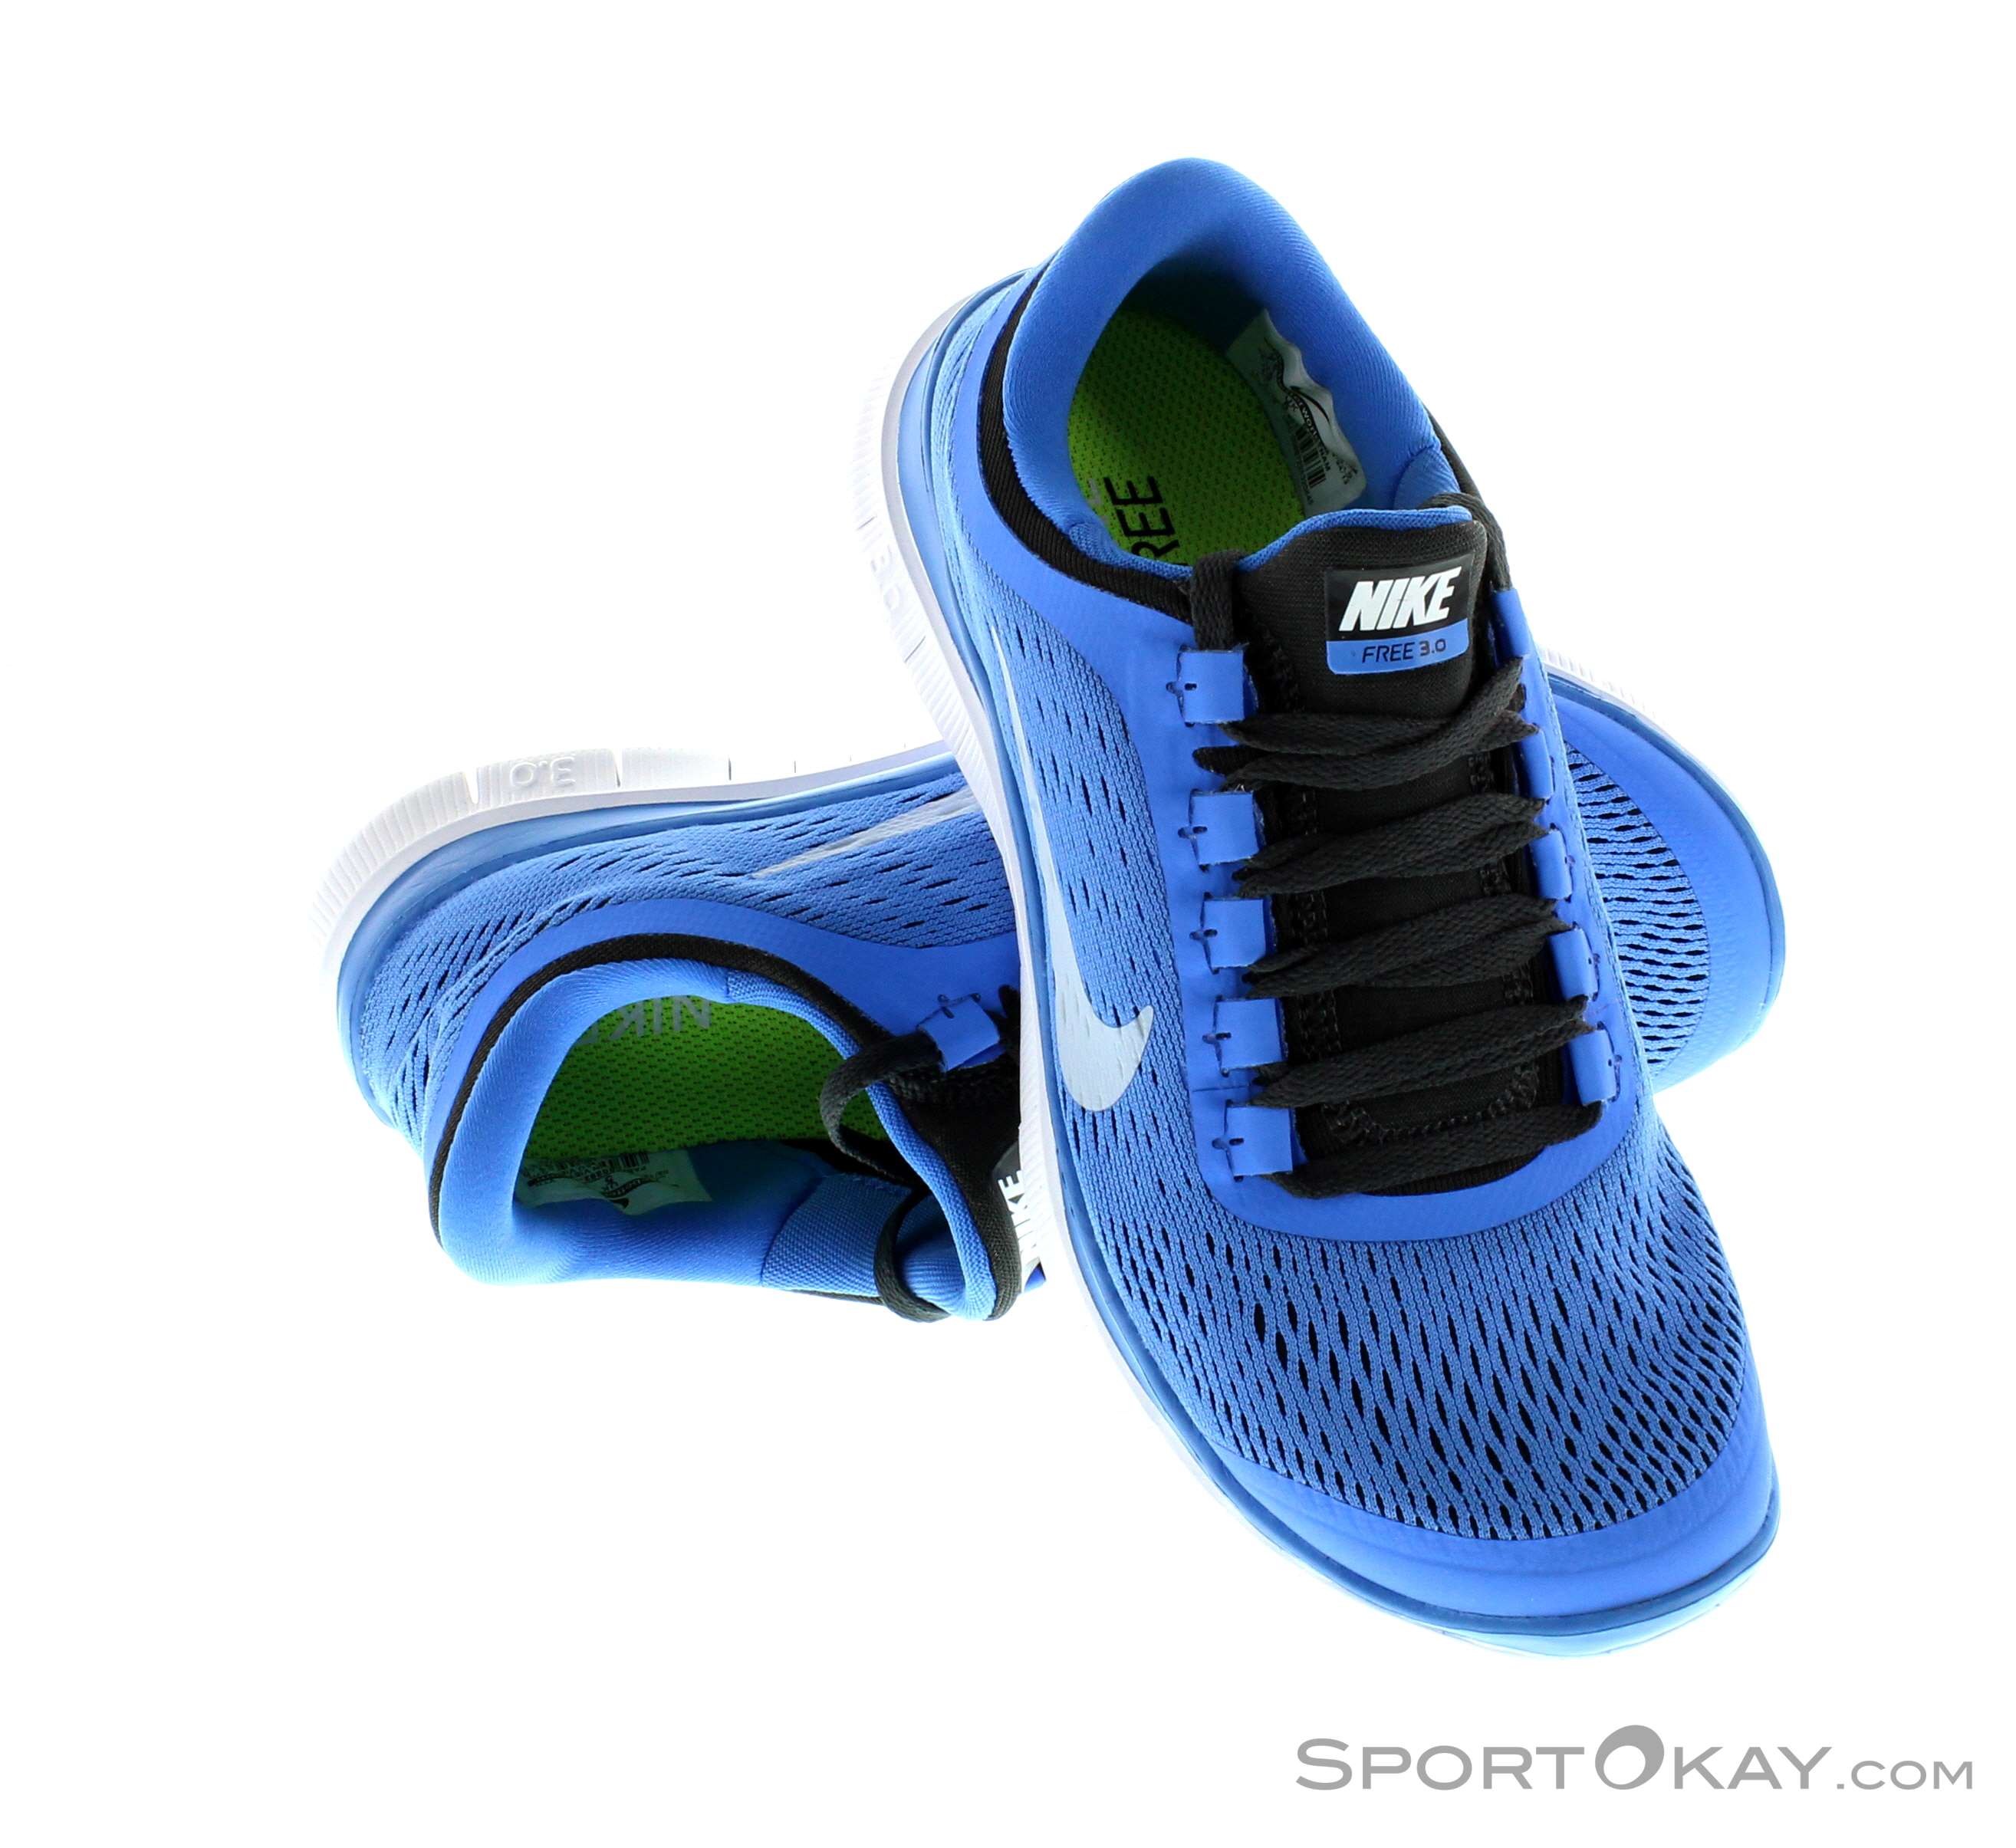 Nike WMNS Free 3.0 V Damen Laufschuhe - - Fitnessschuhe - Fitness - Alle